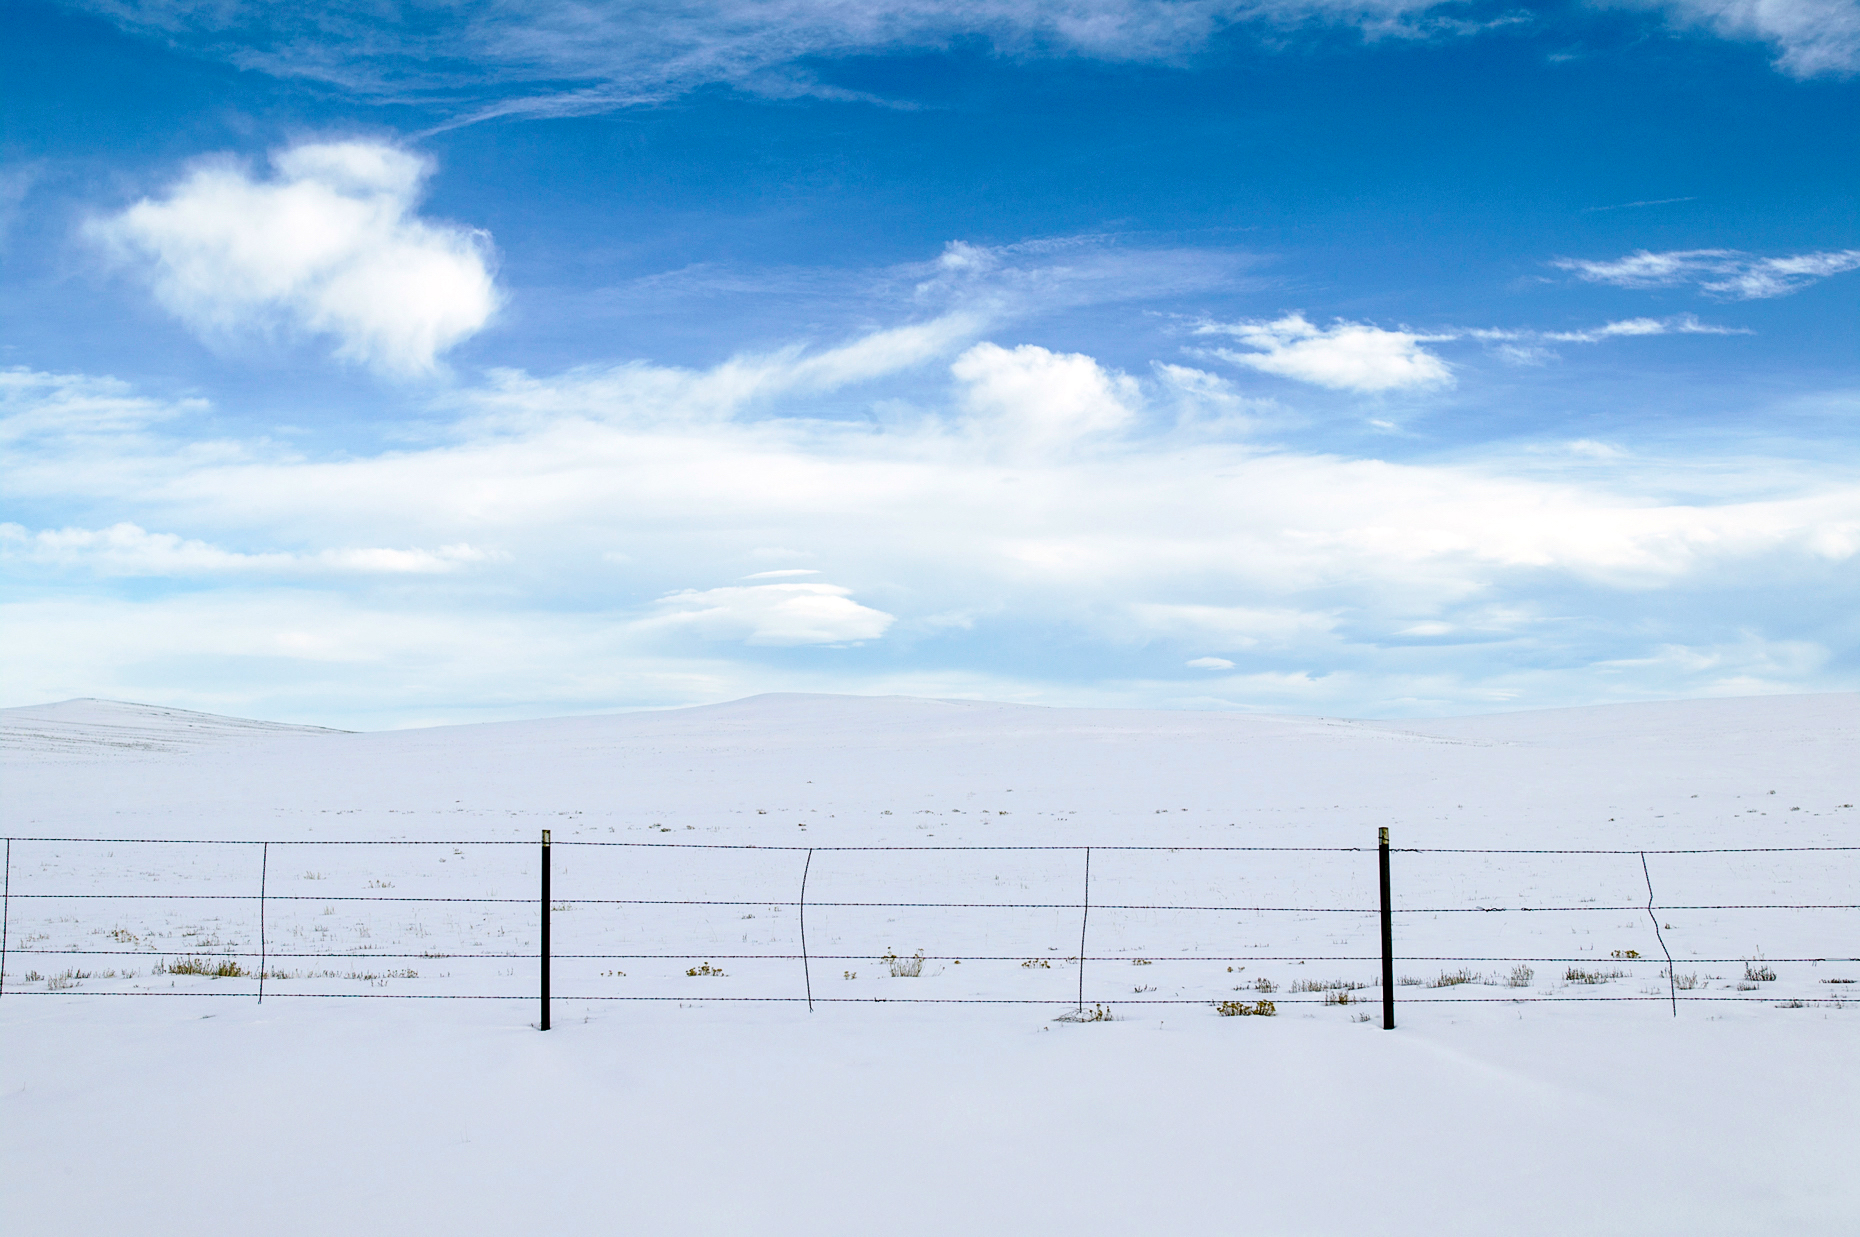 Clouds, snow & ranch fence near Fairplay, CO